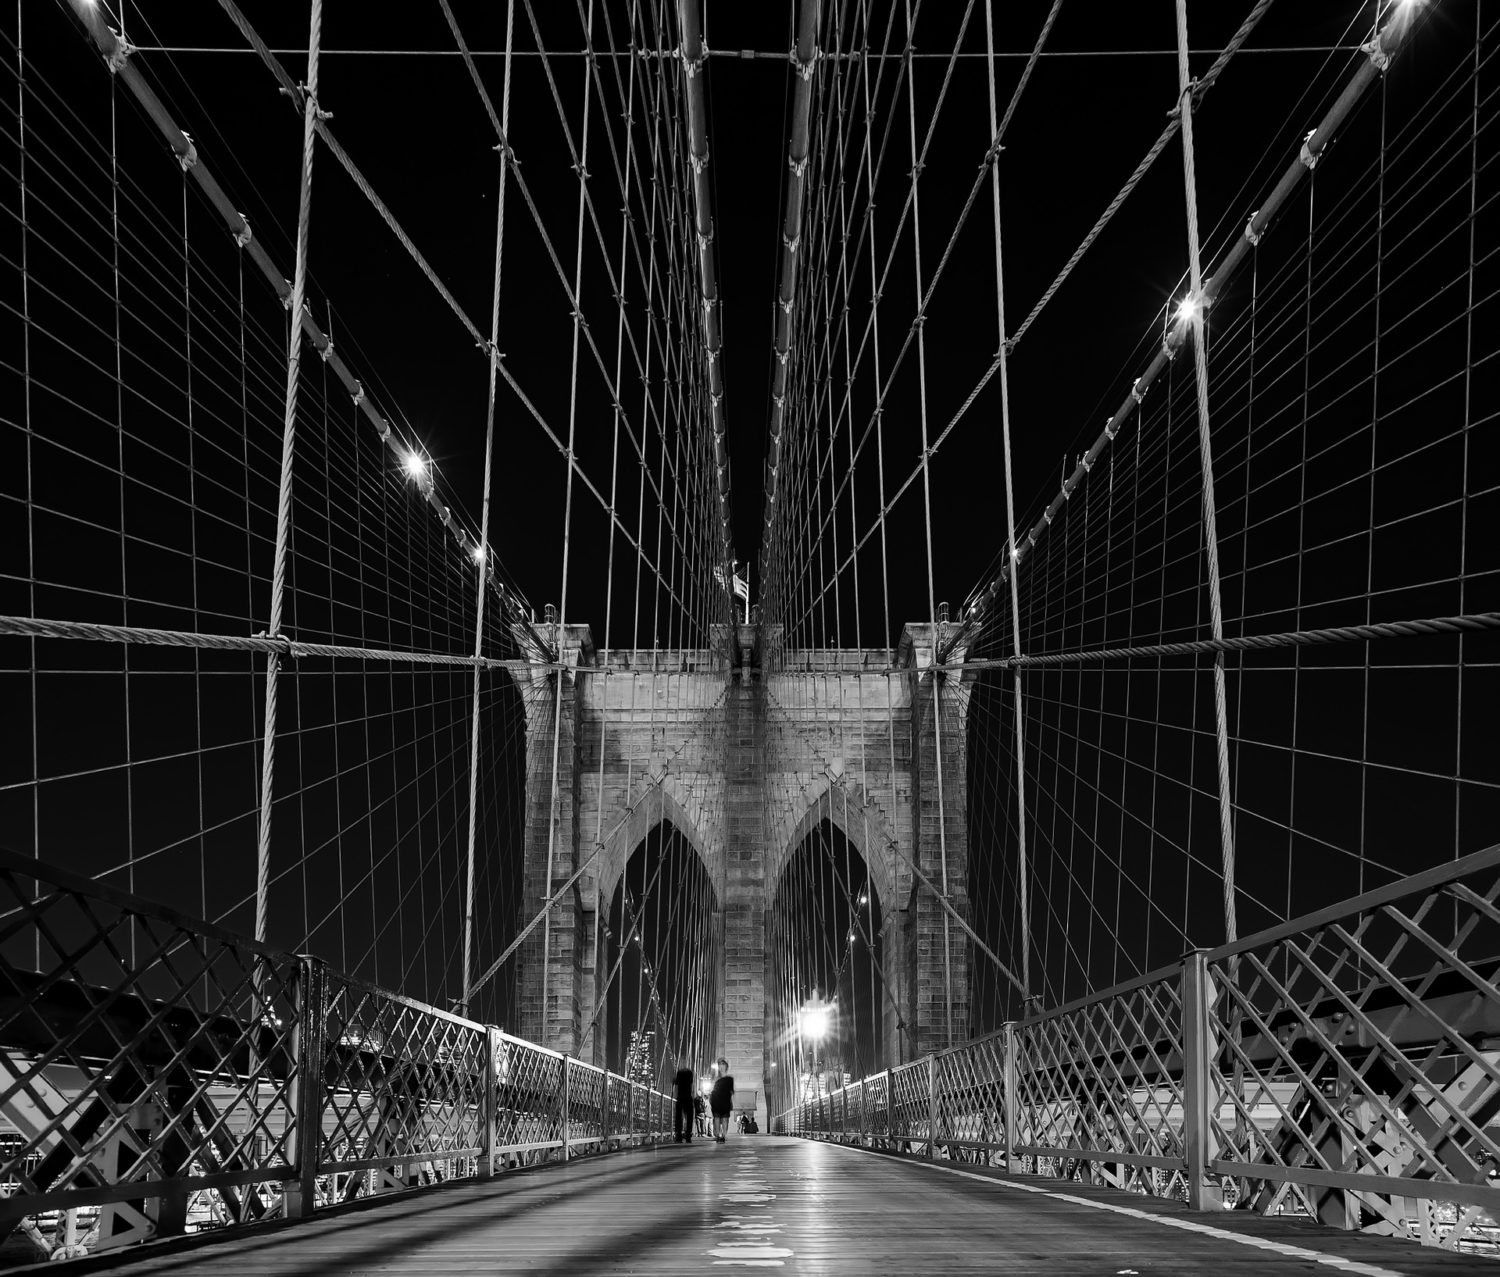 One oft most beautiful bridges in the world - the Brooklyn Bridge